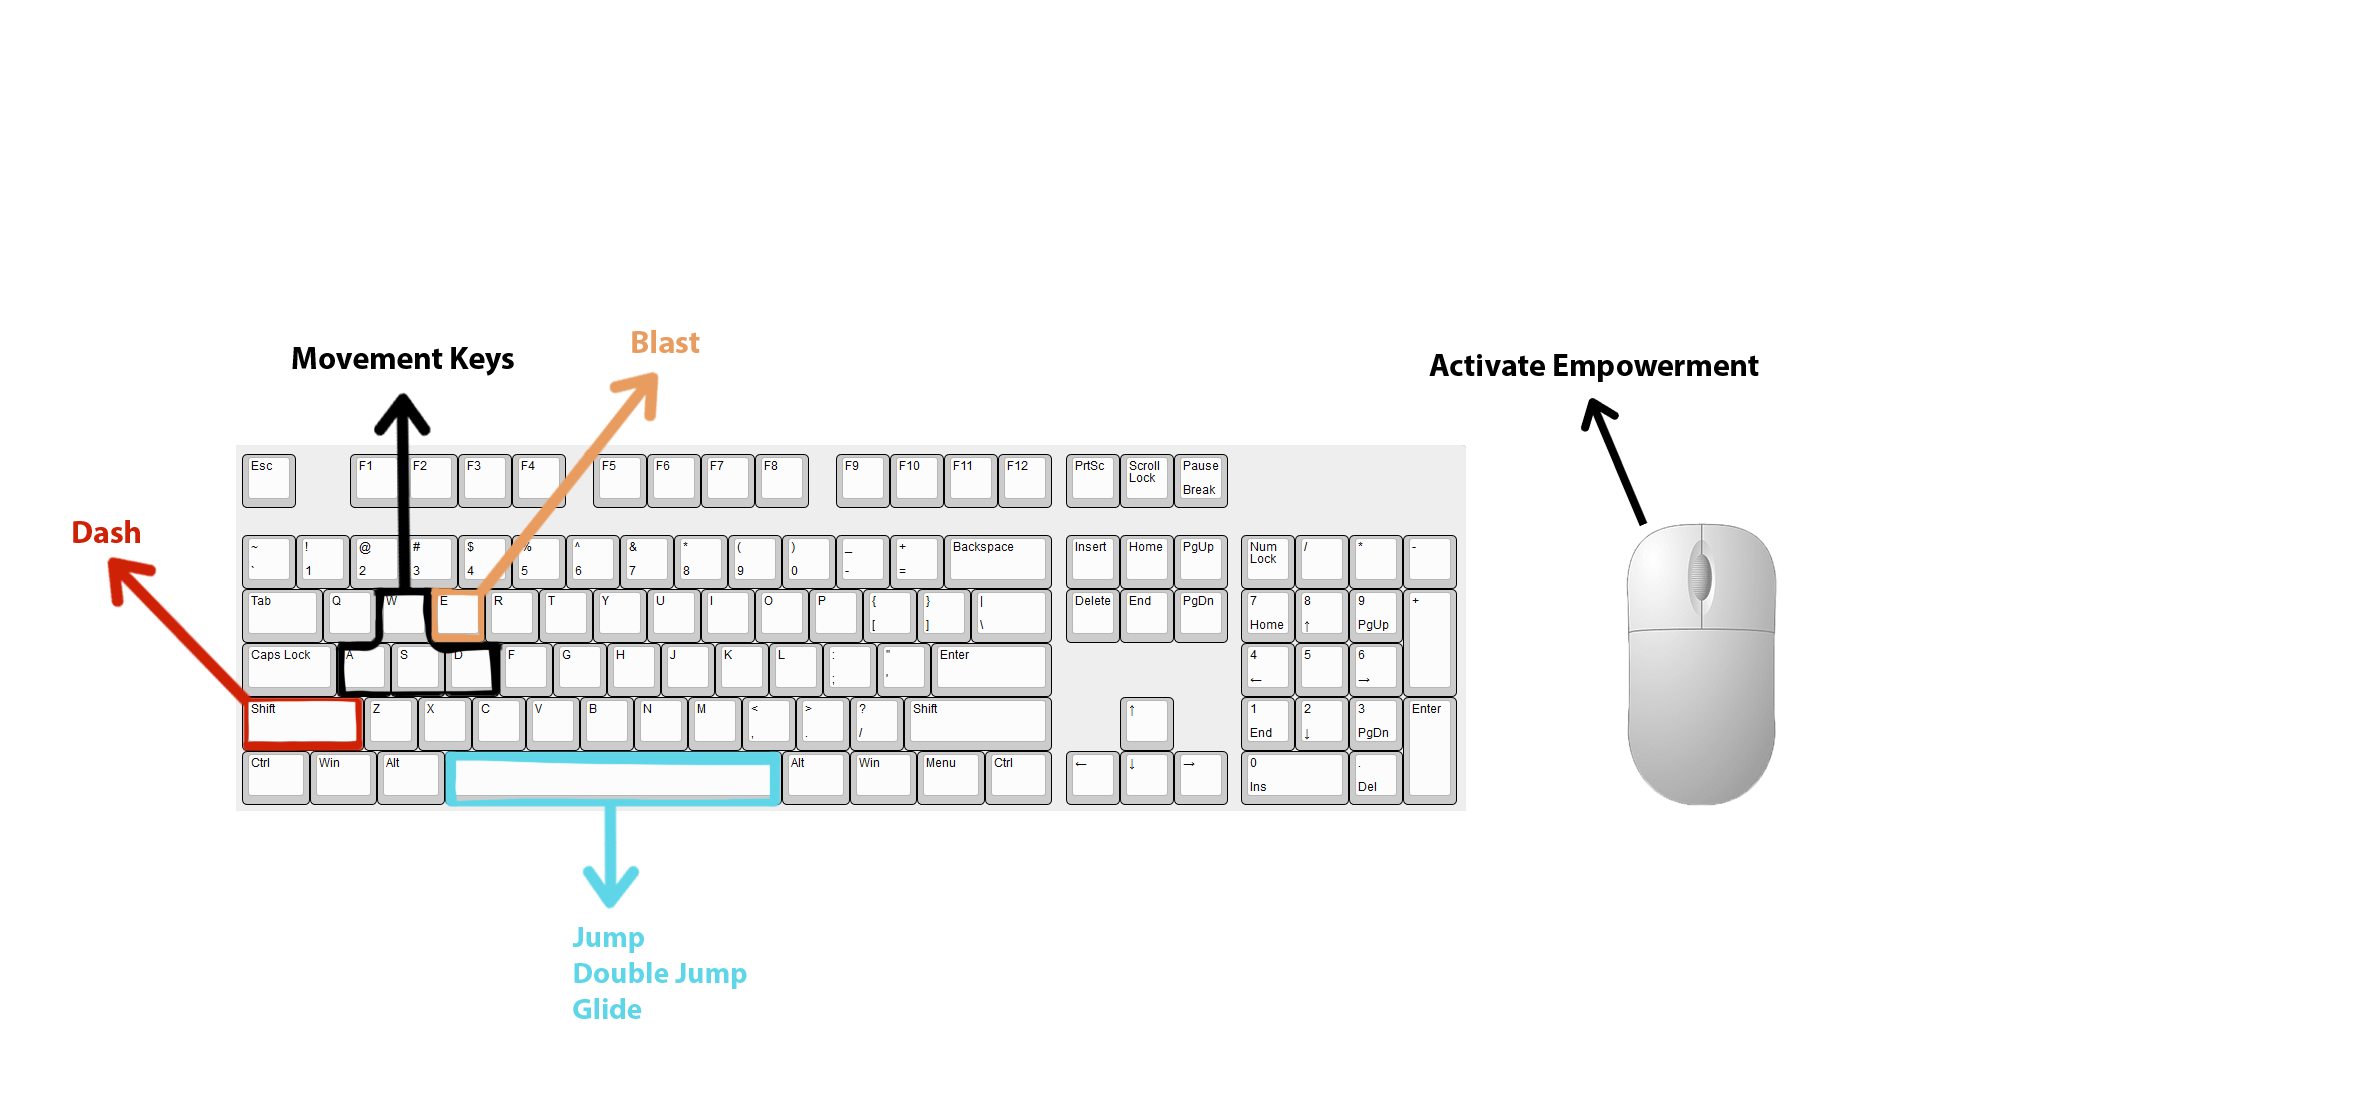 Keyboard Controls